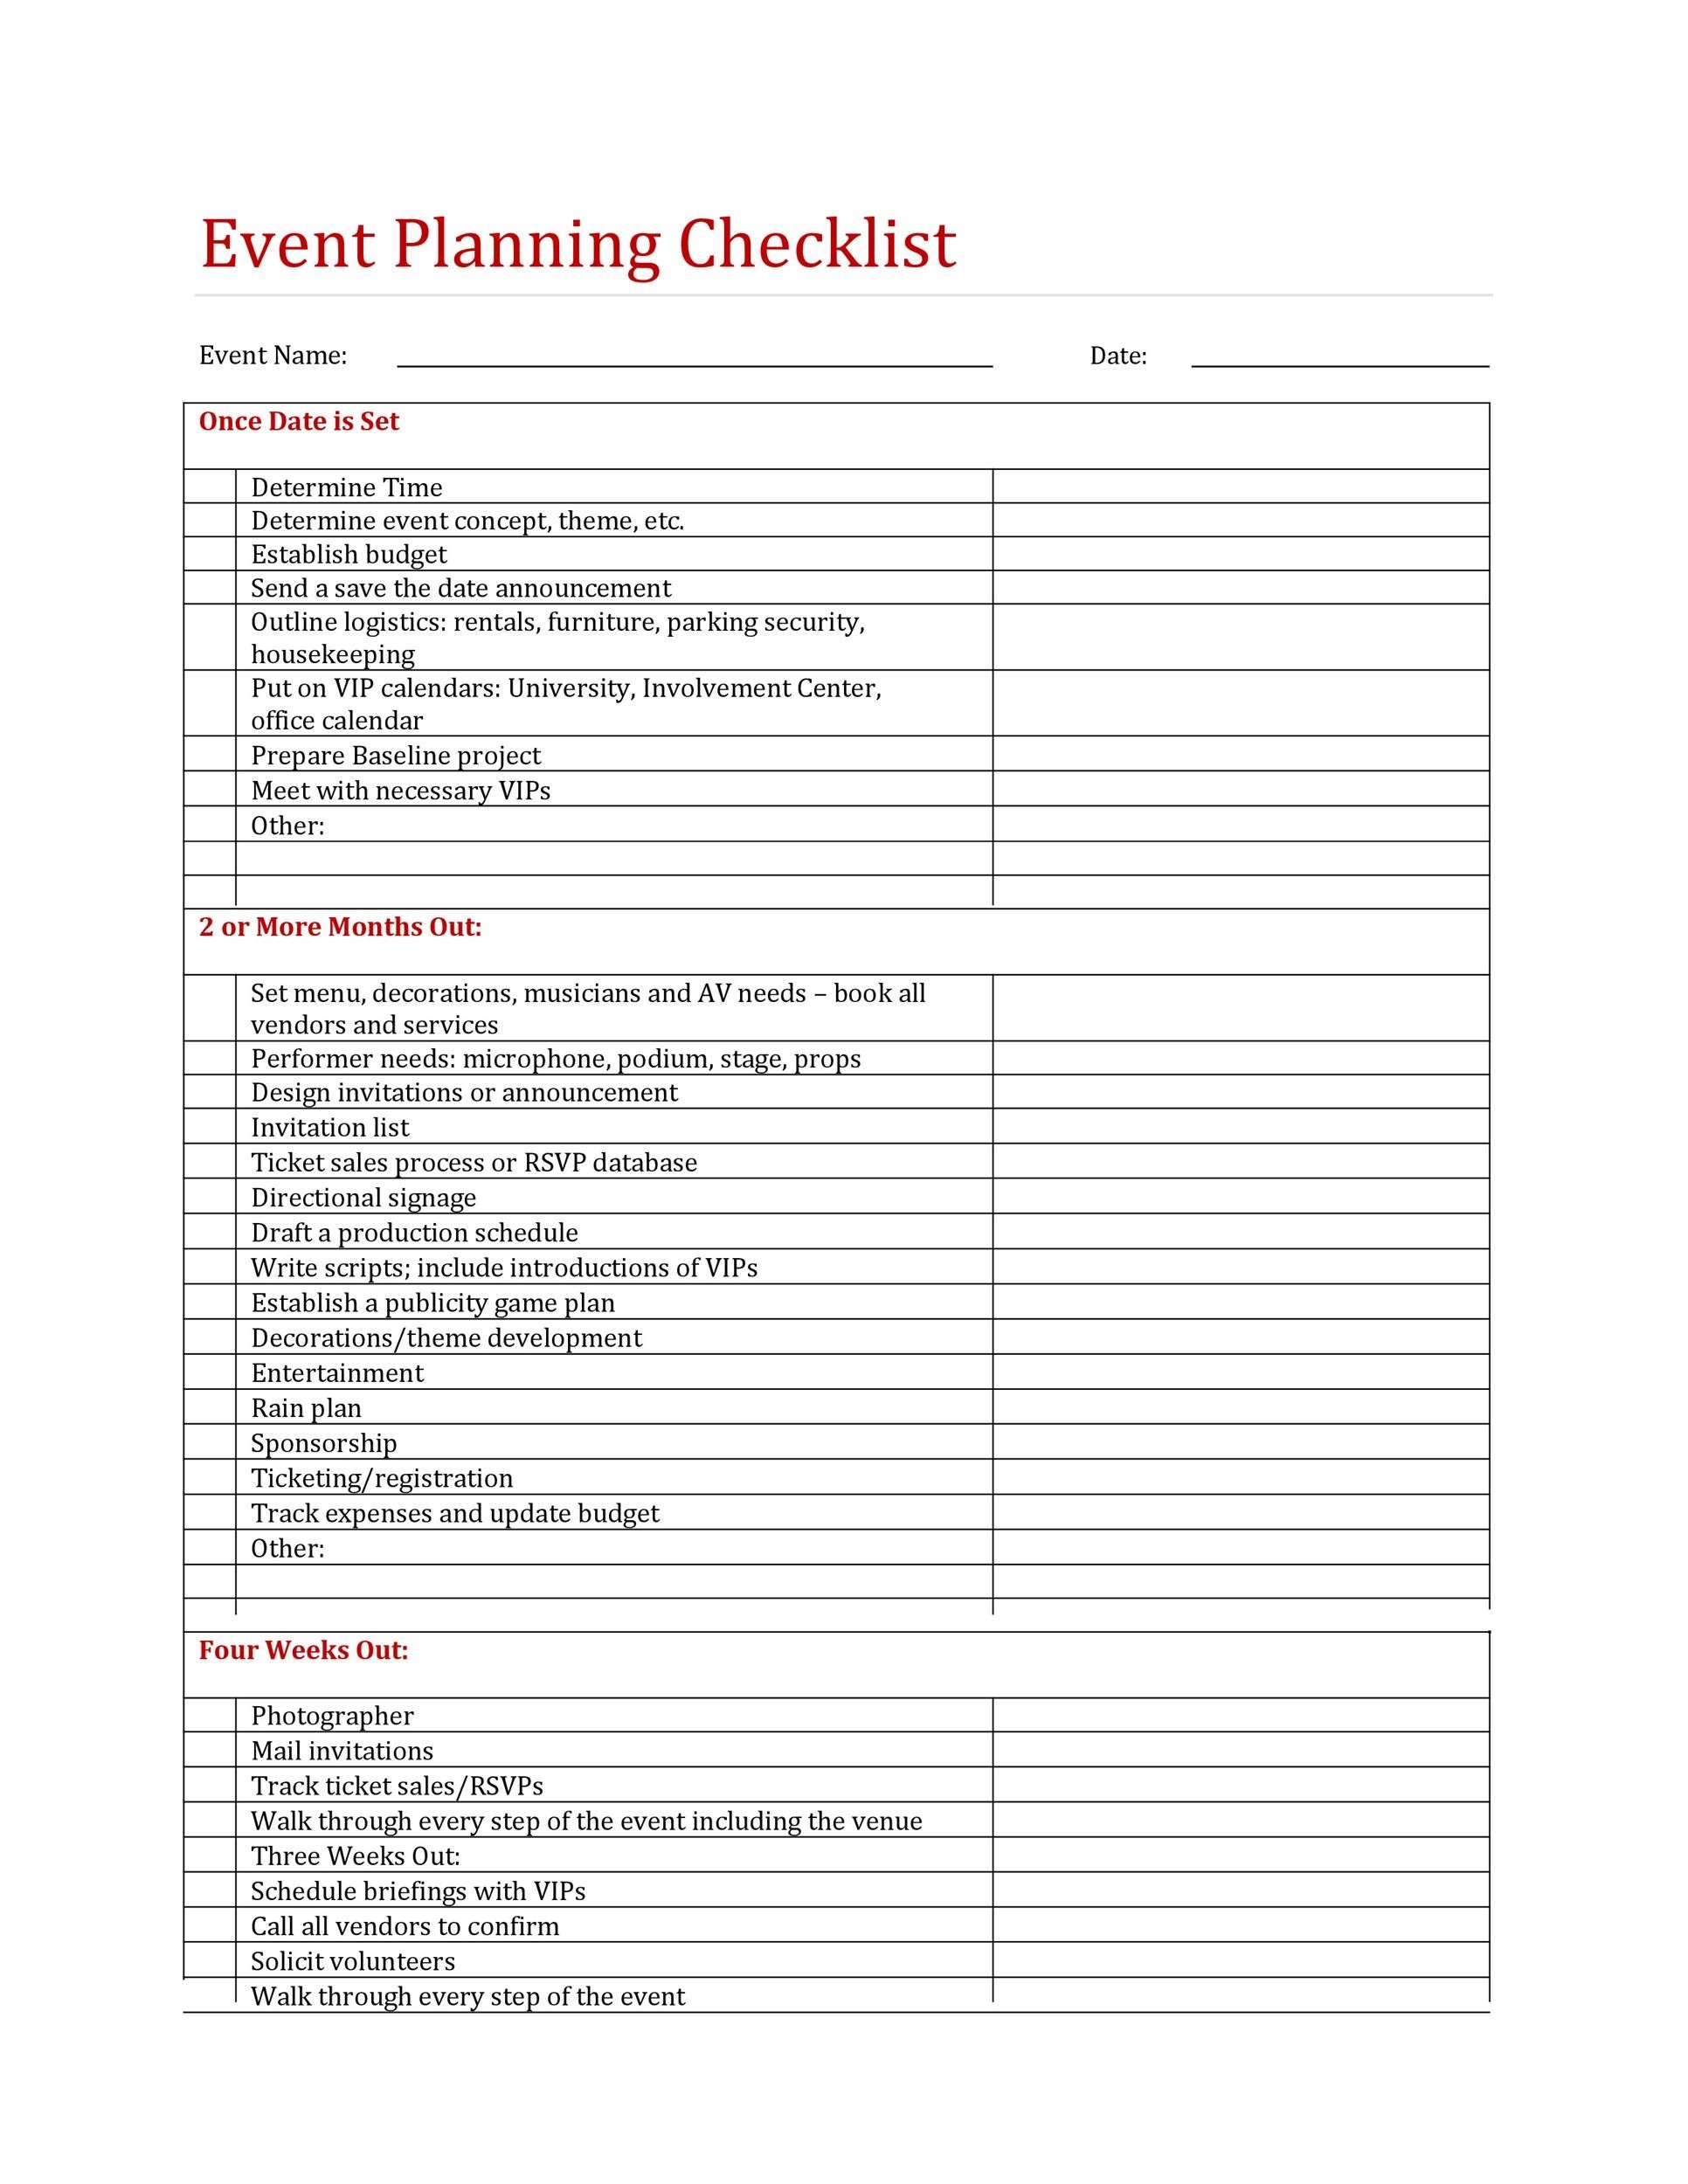 Event Planner Checklist Free Template